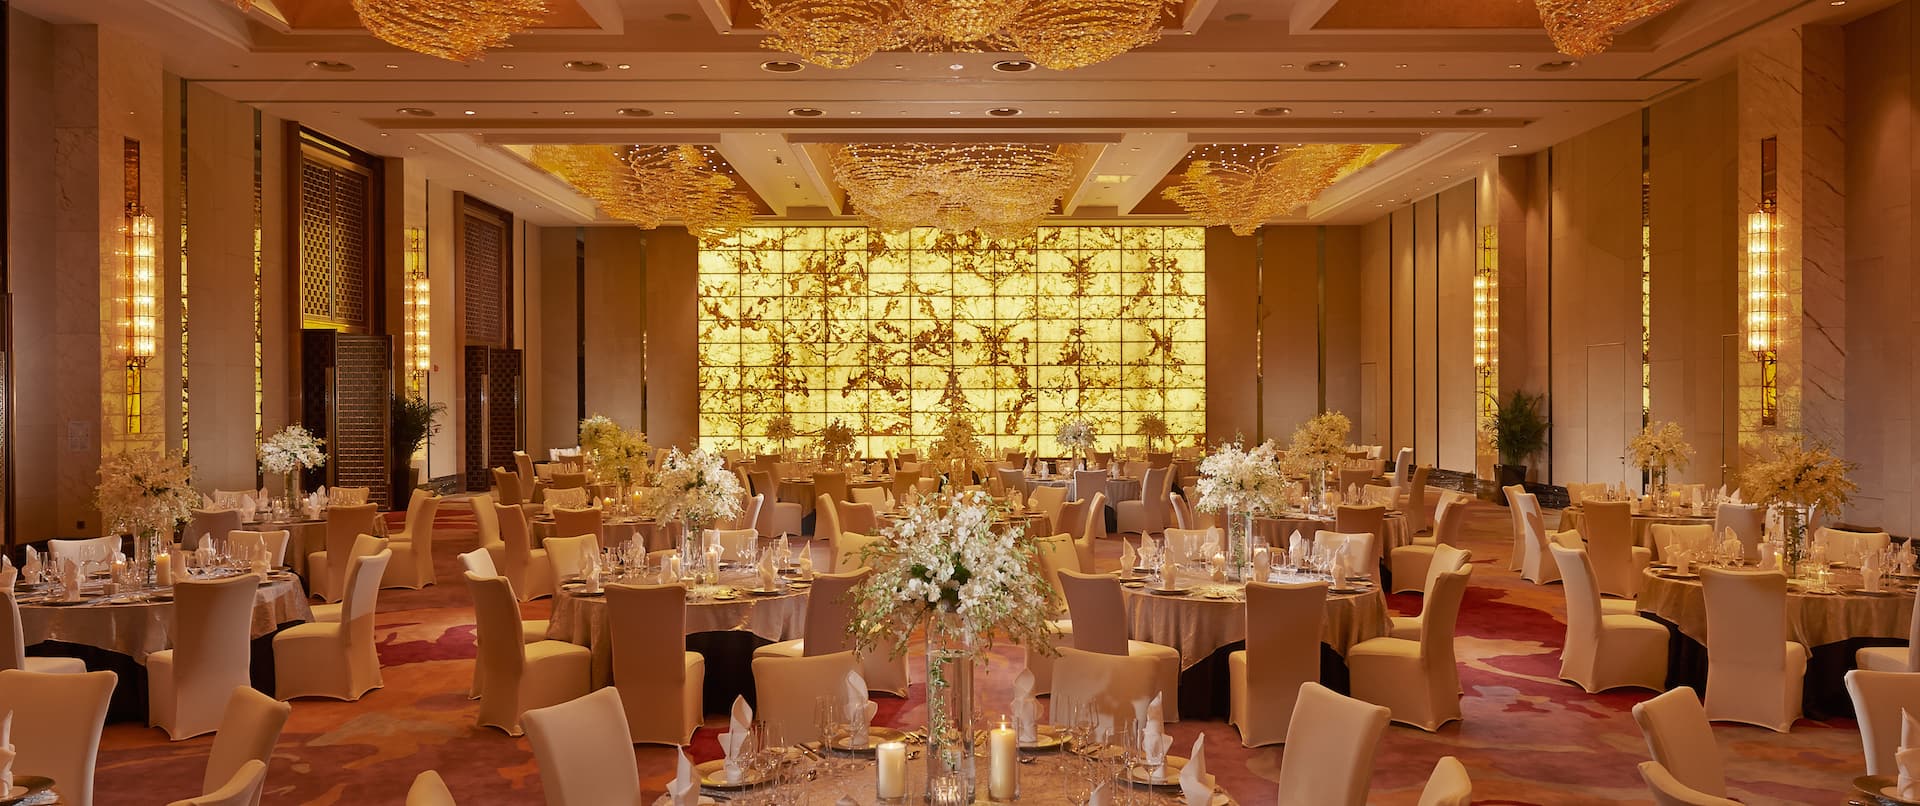 Hilton Zhengzhou Hotel, China - Grand Ballroom Western Wedding Set Up